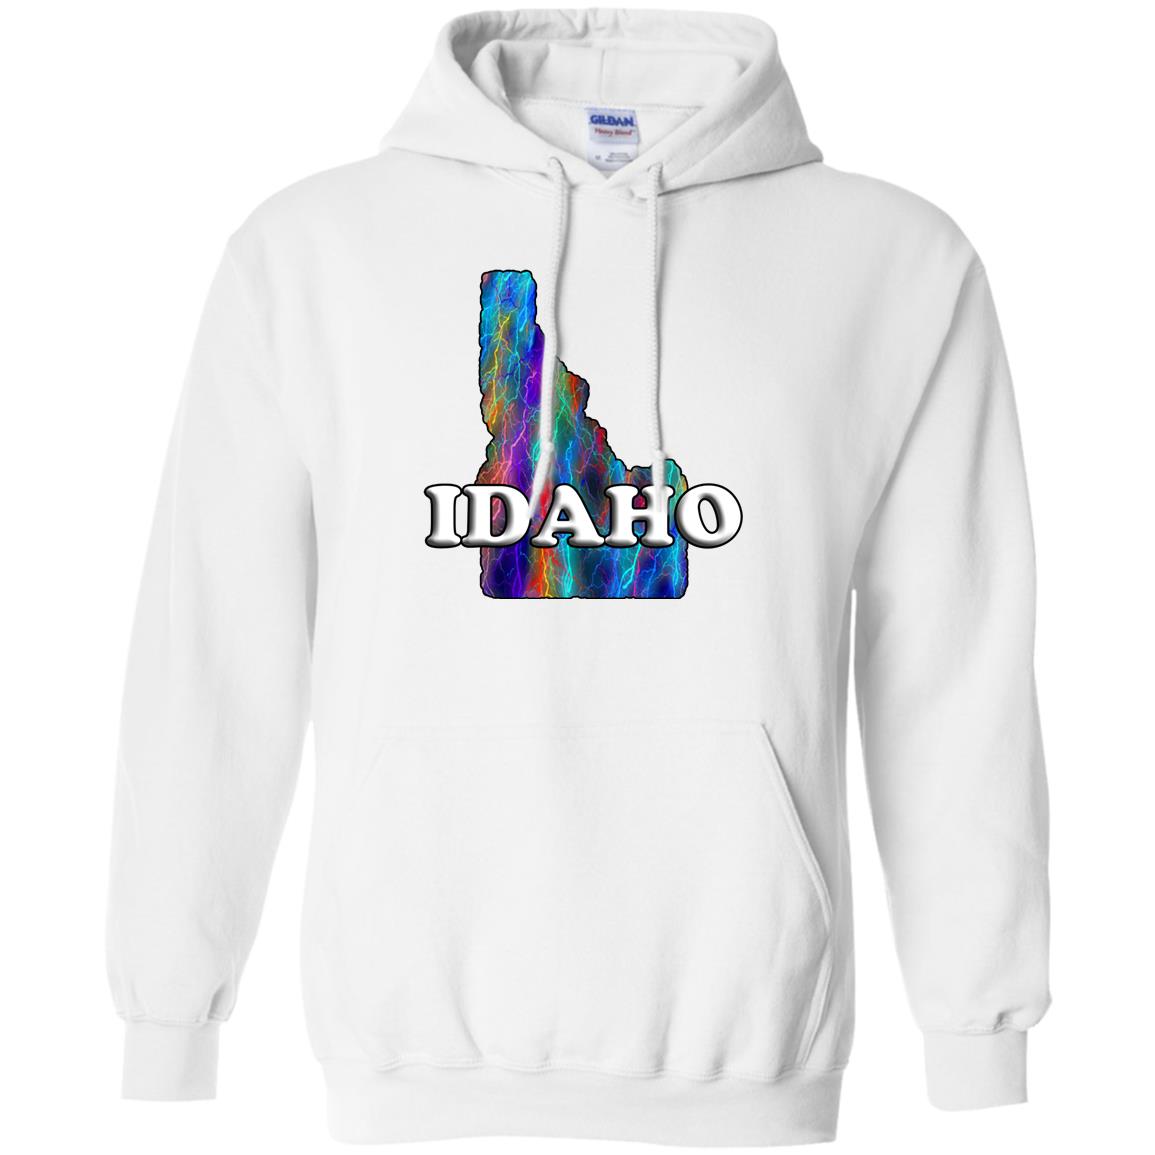 Idaho State Hoodie